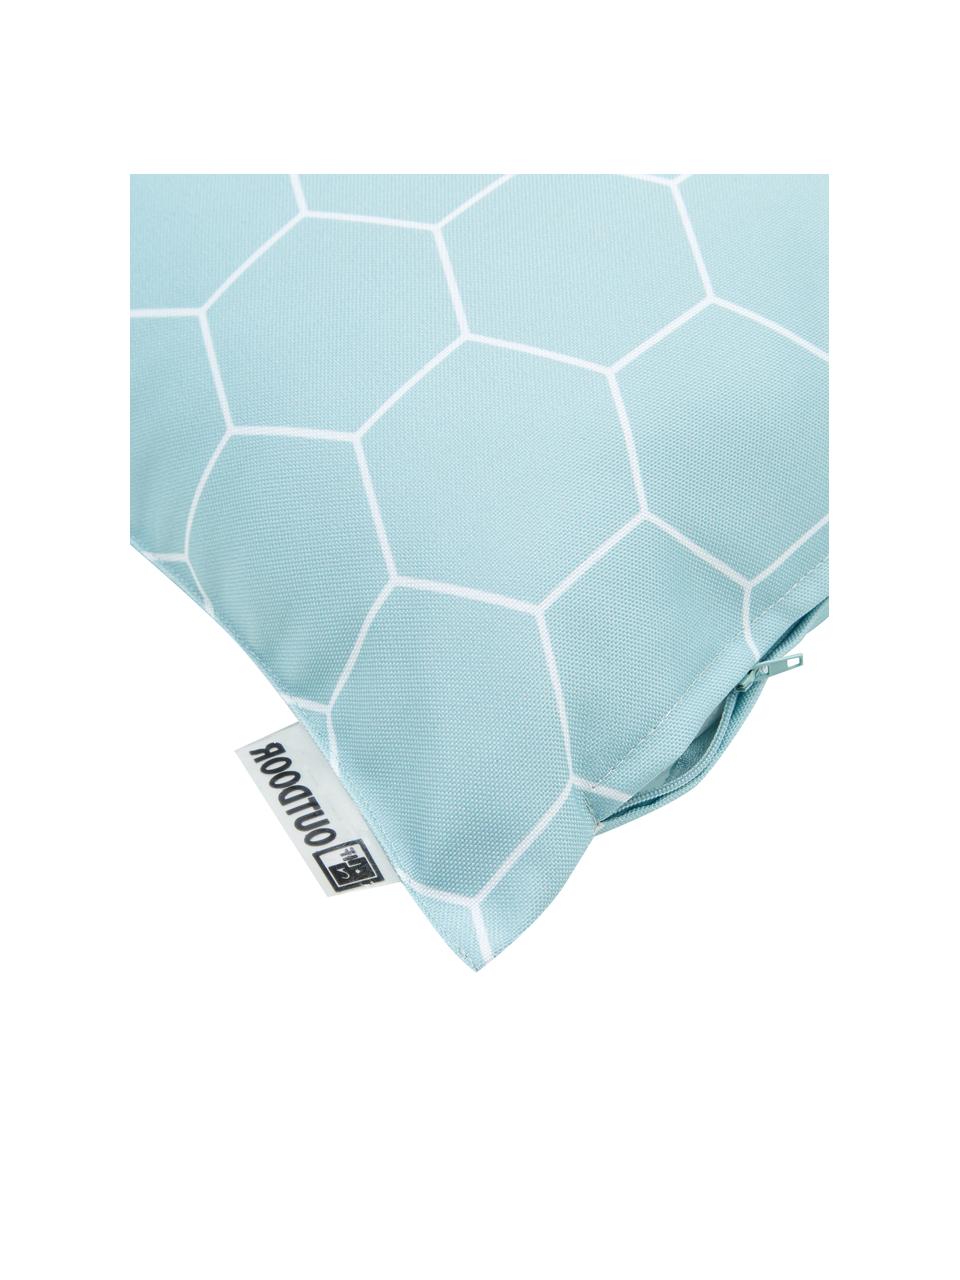 Gemustertes Outdoor-Kissen Honeycomb, 100% Polyester, Blau, Weiss, 47 x 47 cm